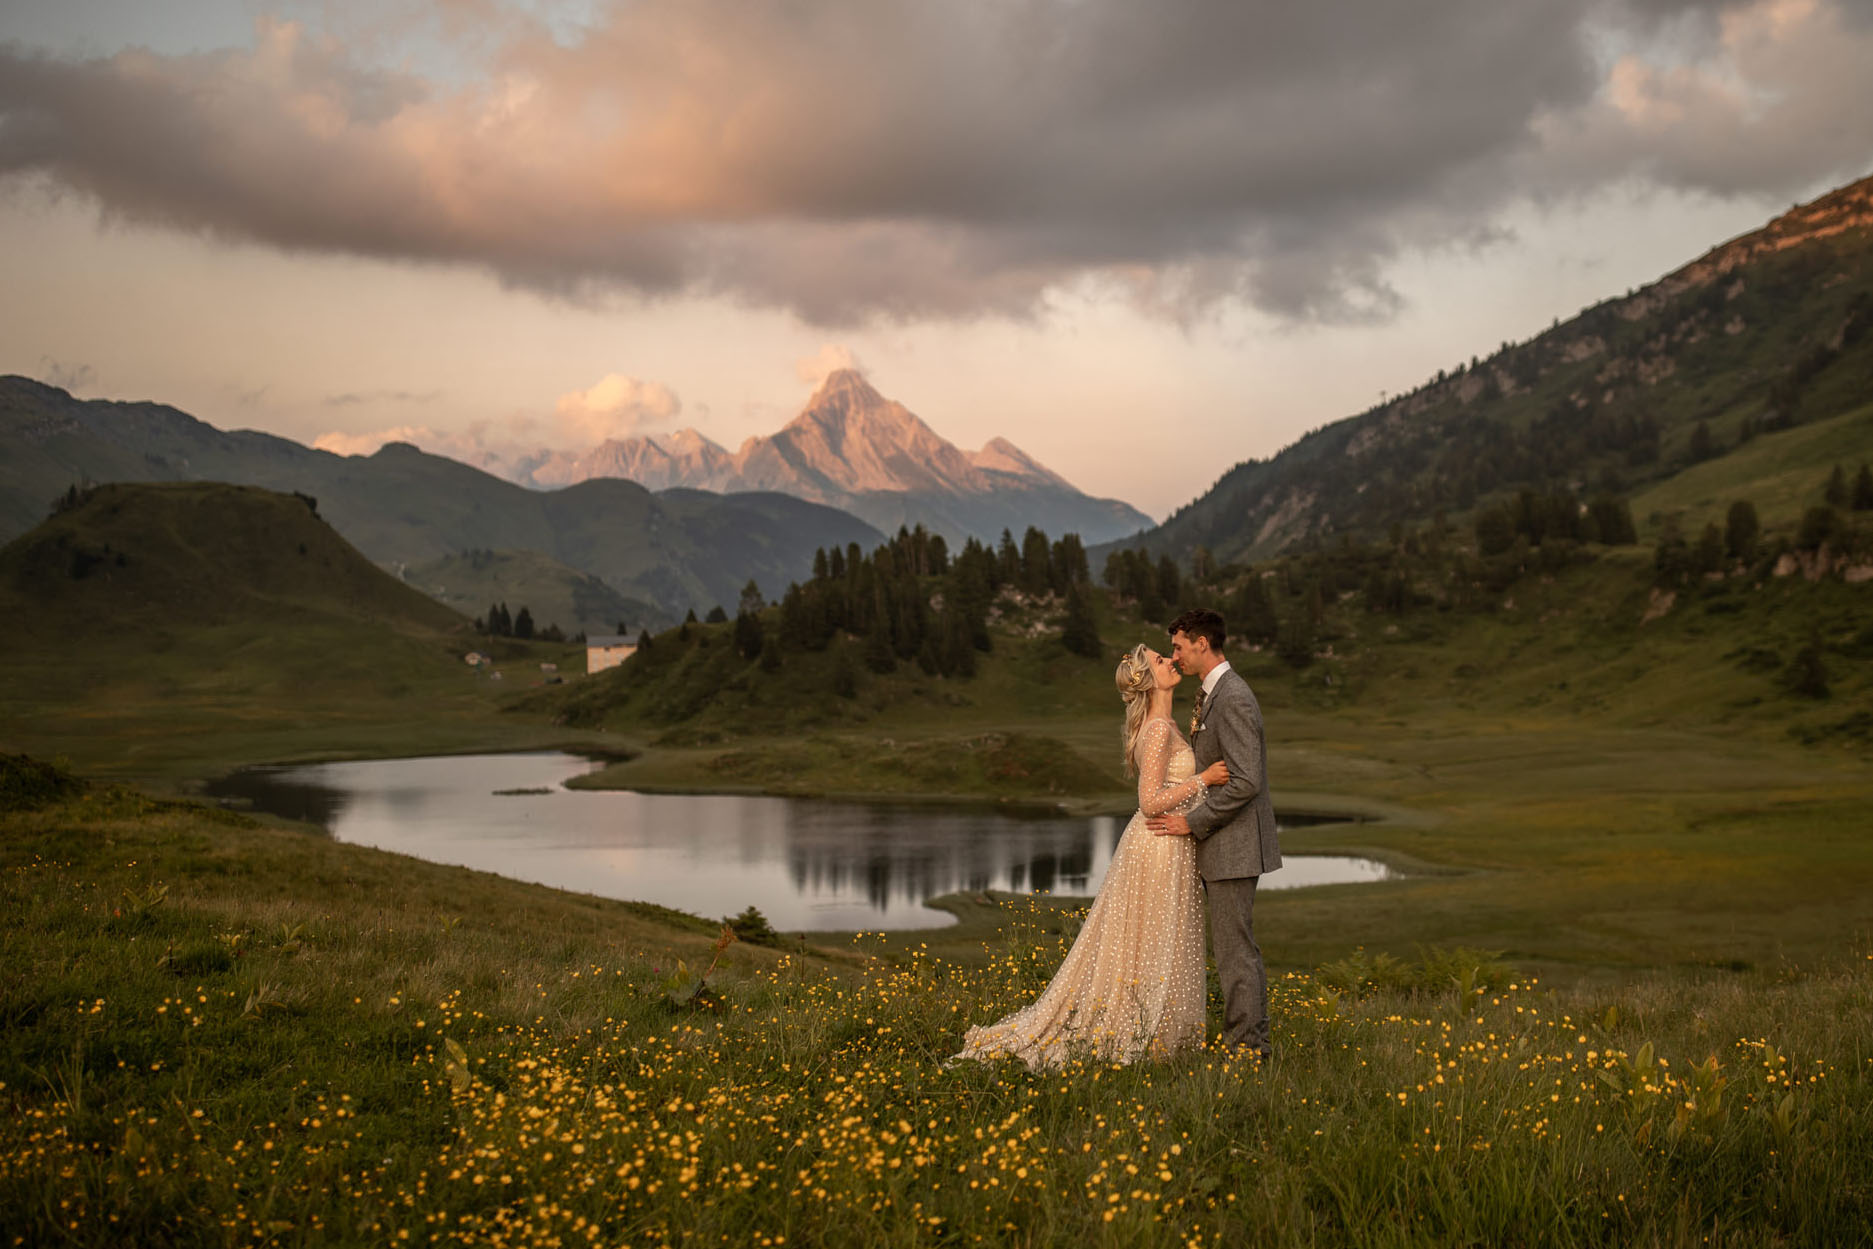 Elopement Wedding photographer in austria, switzerland, dolomites and norway